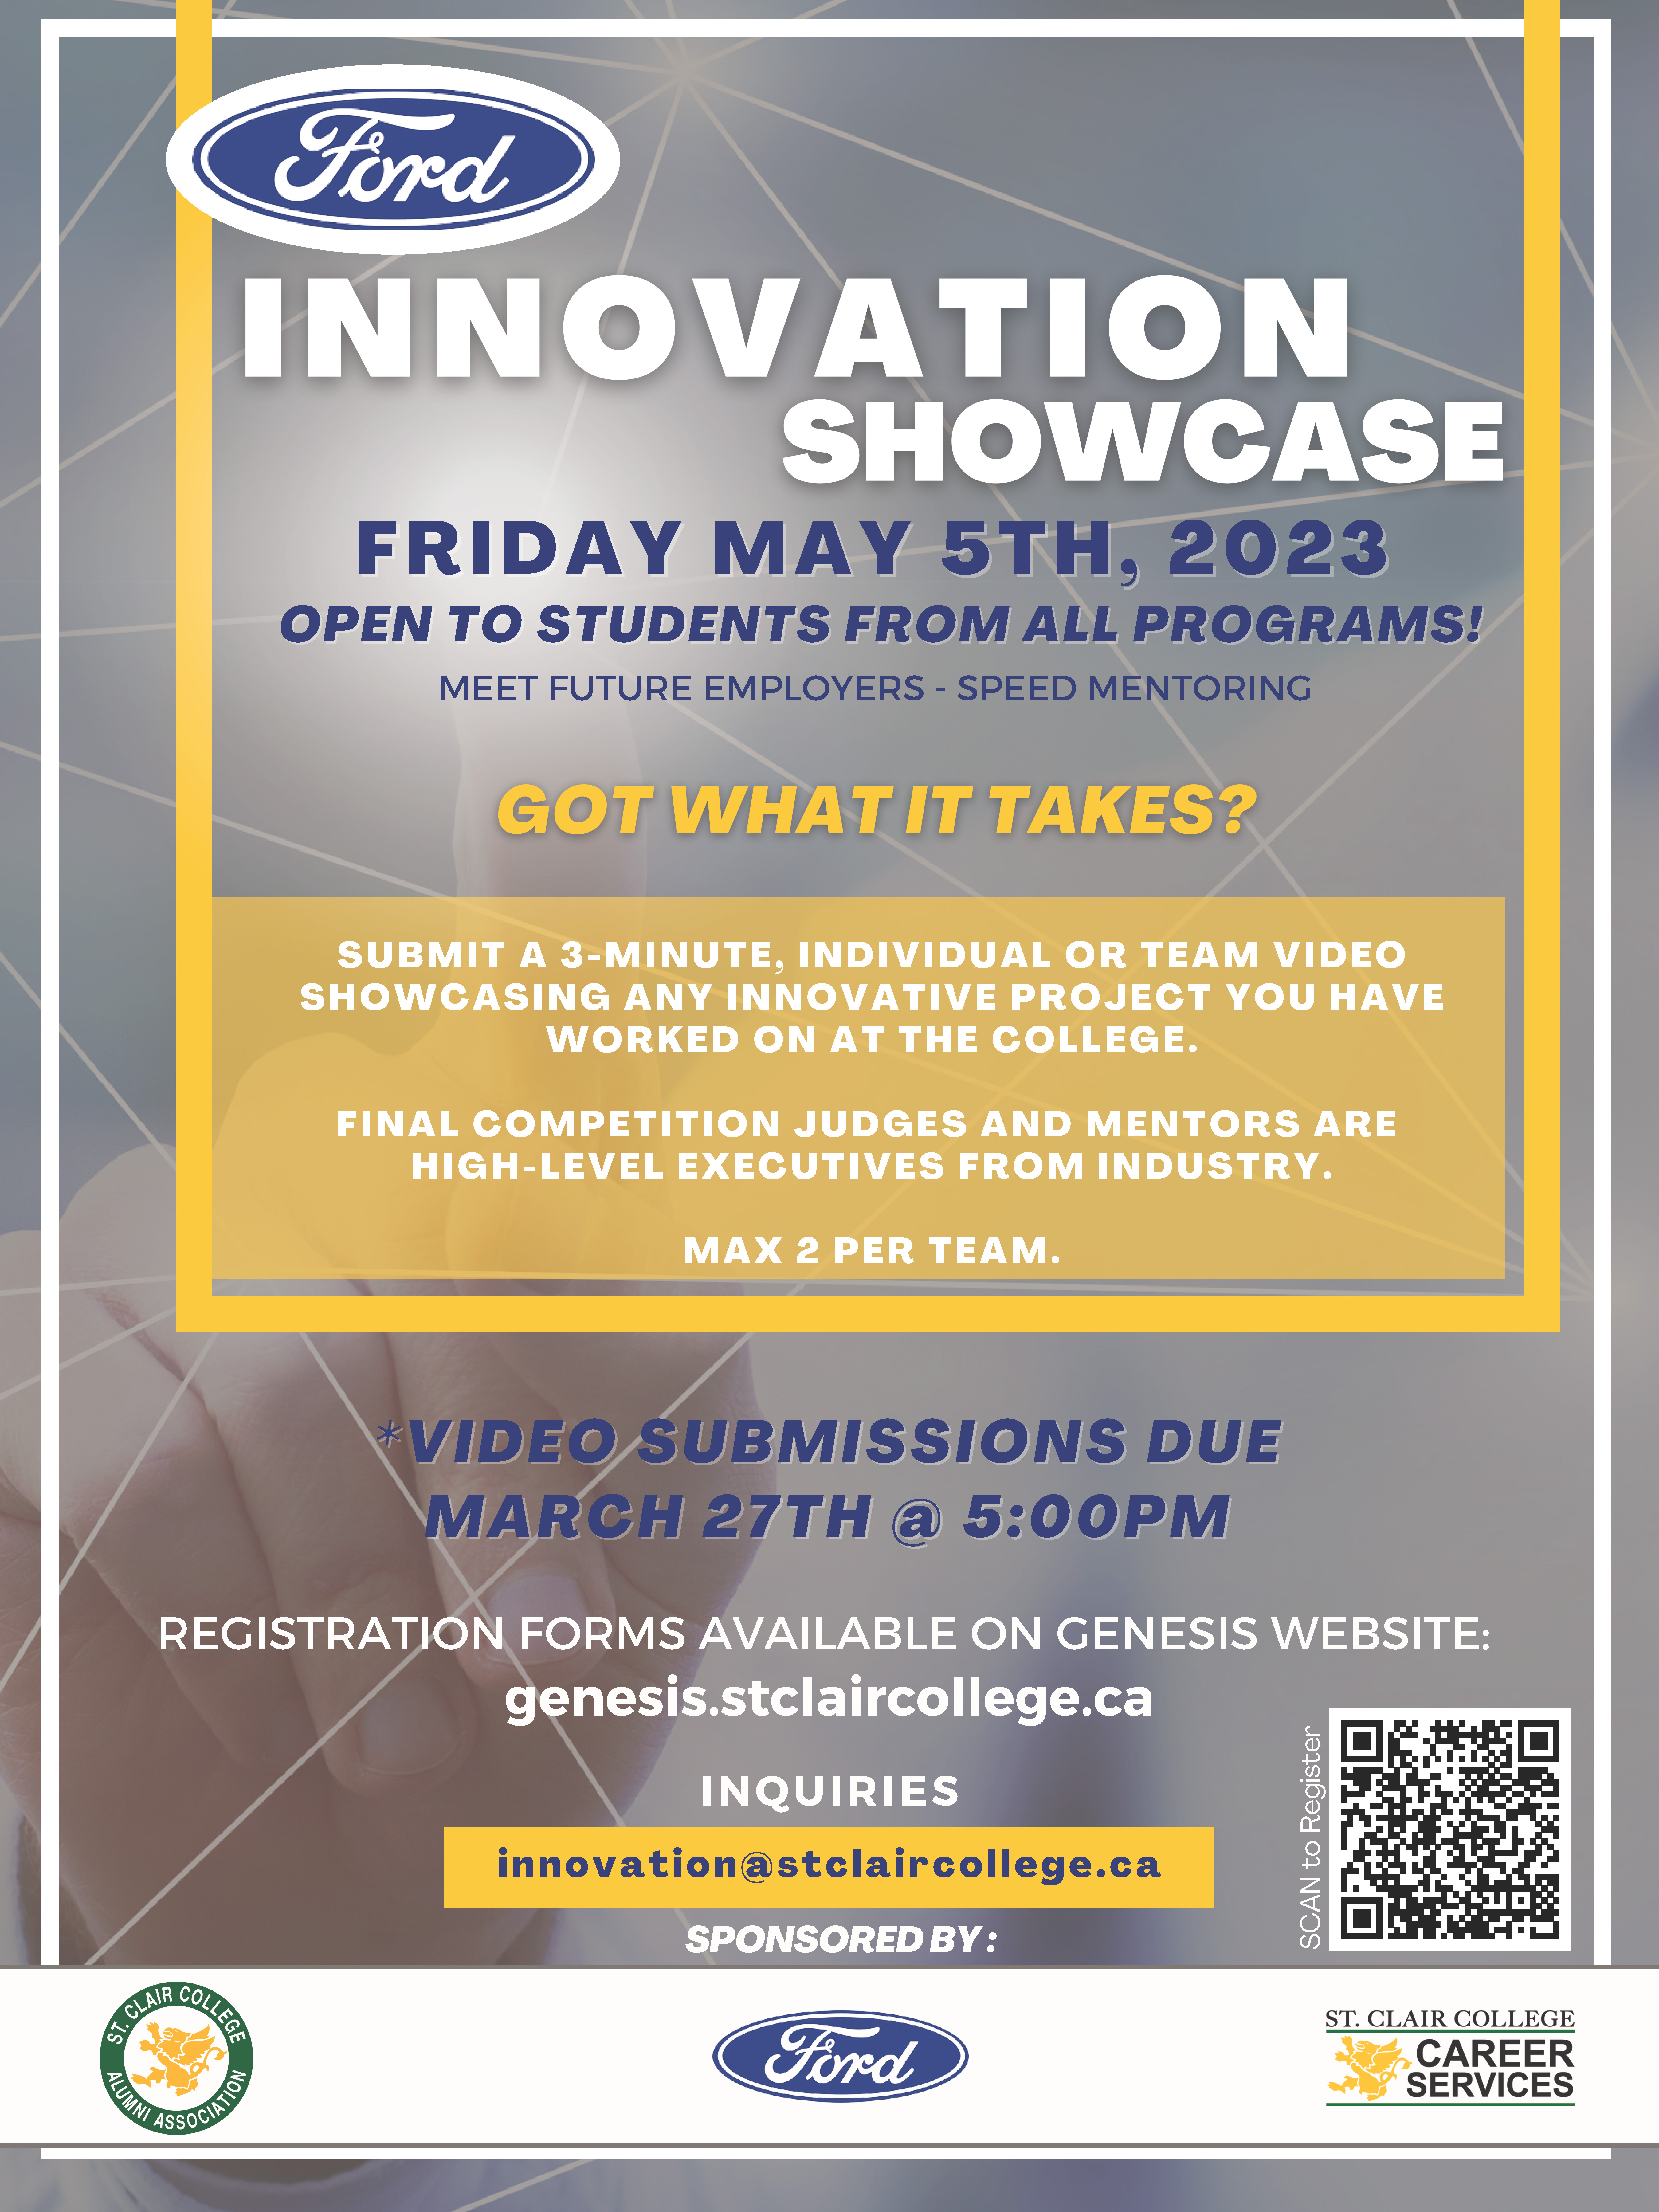 Ford Innovation Showcase - Friday May 5, 2023